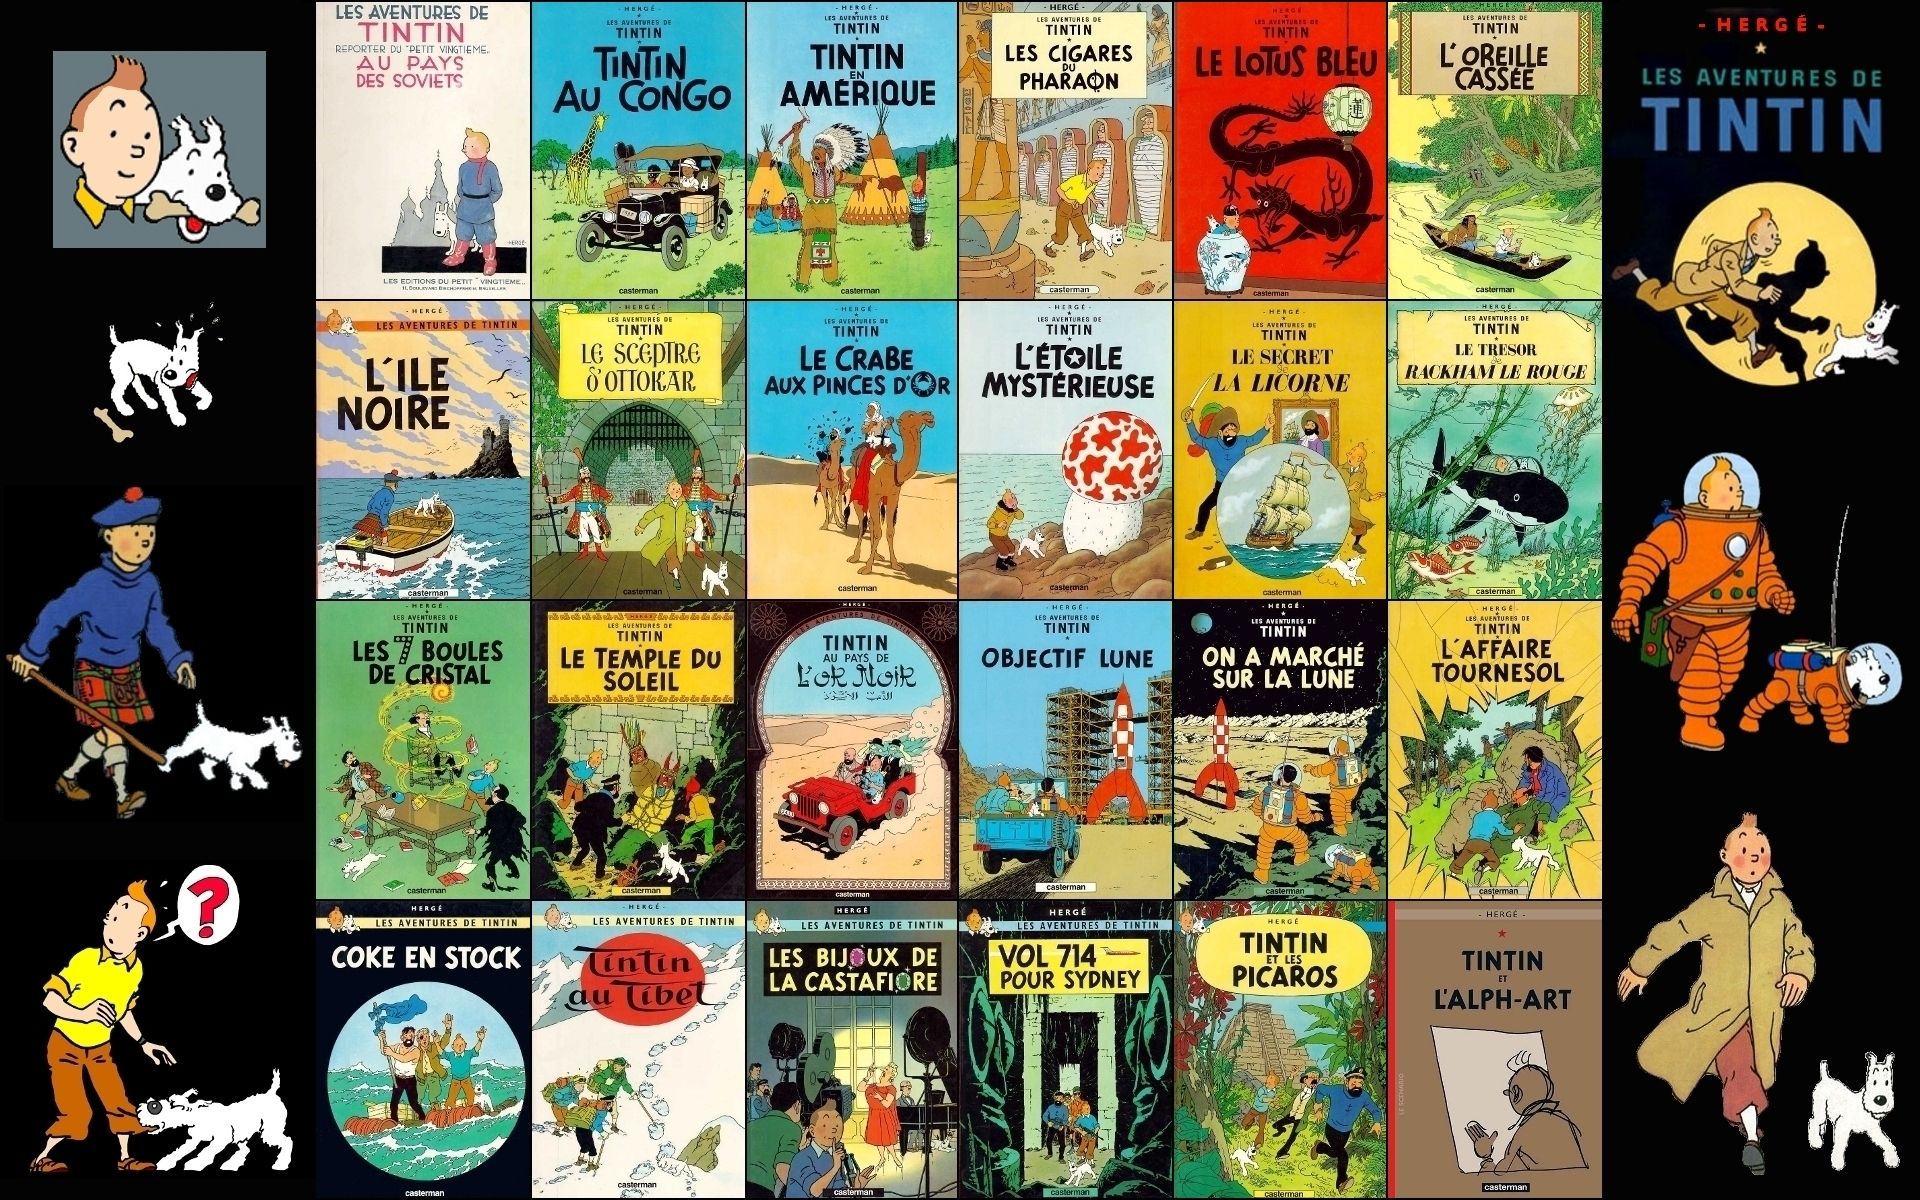 The adventures of Tintin - Tintin Wallpaper 4985656 - Fanpop